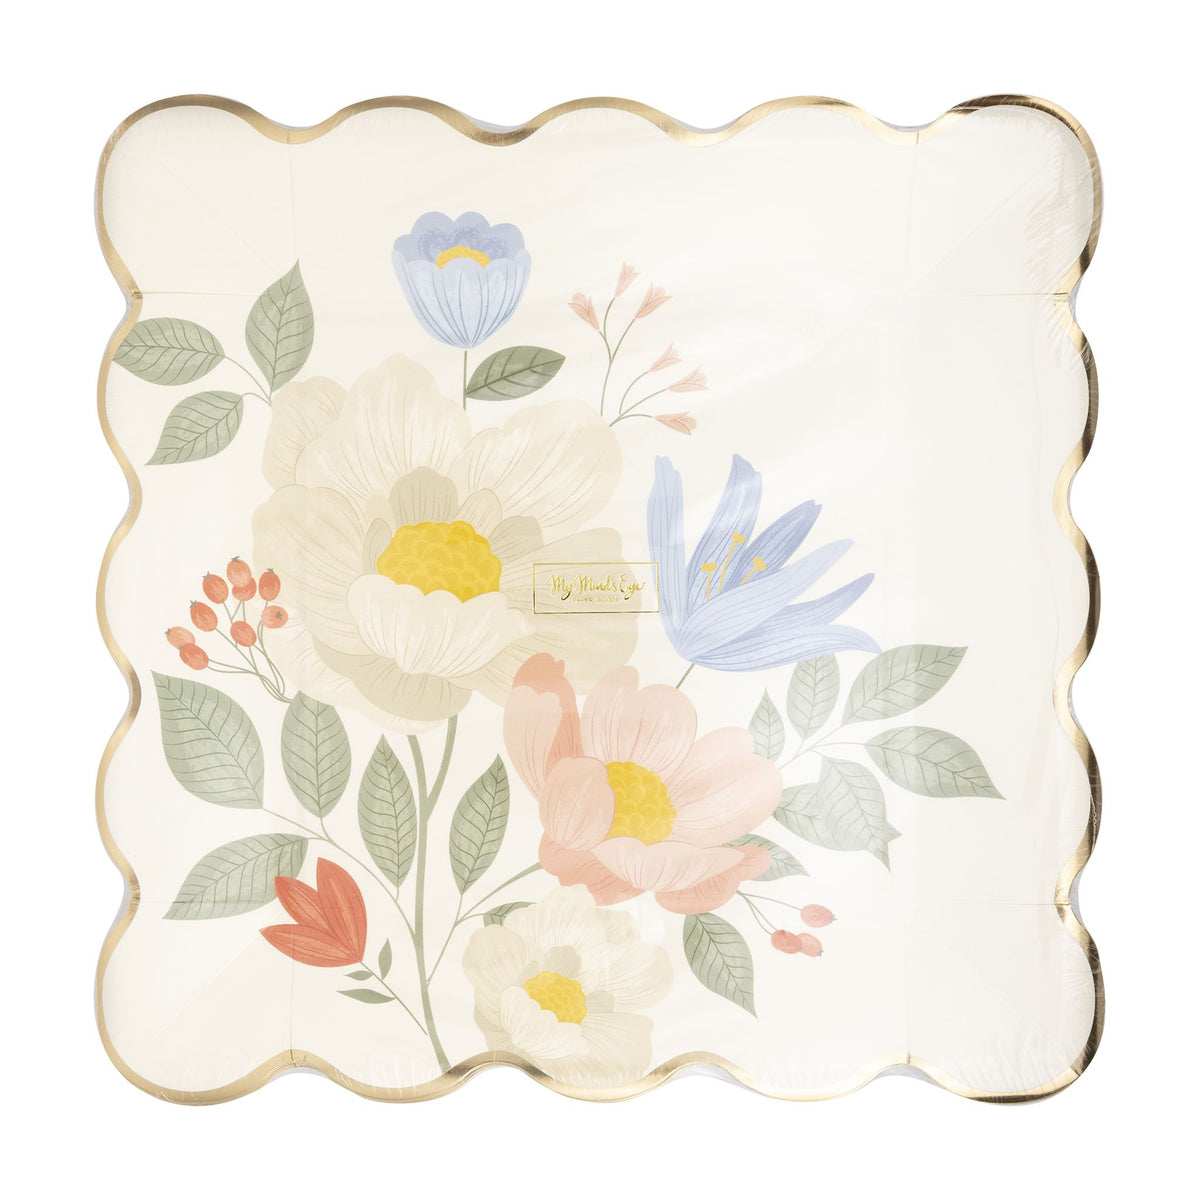 Floral Corner Paper Plates - The Preppy Bunny